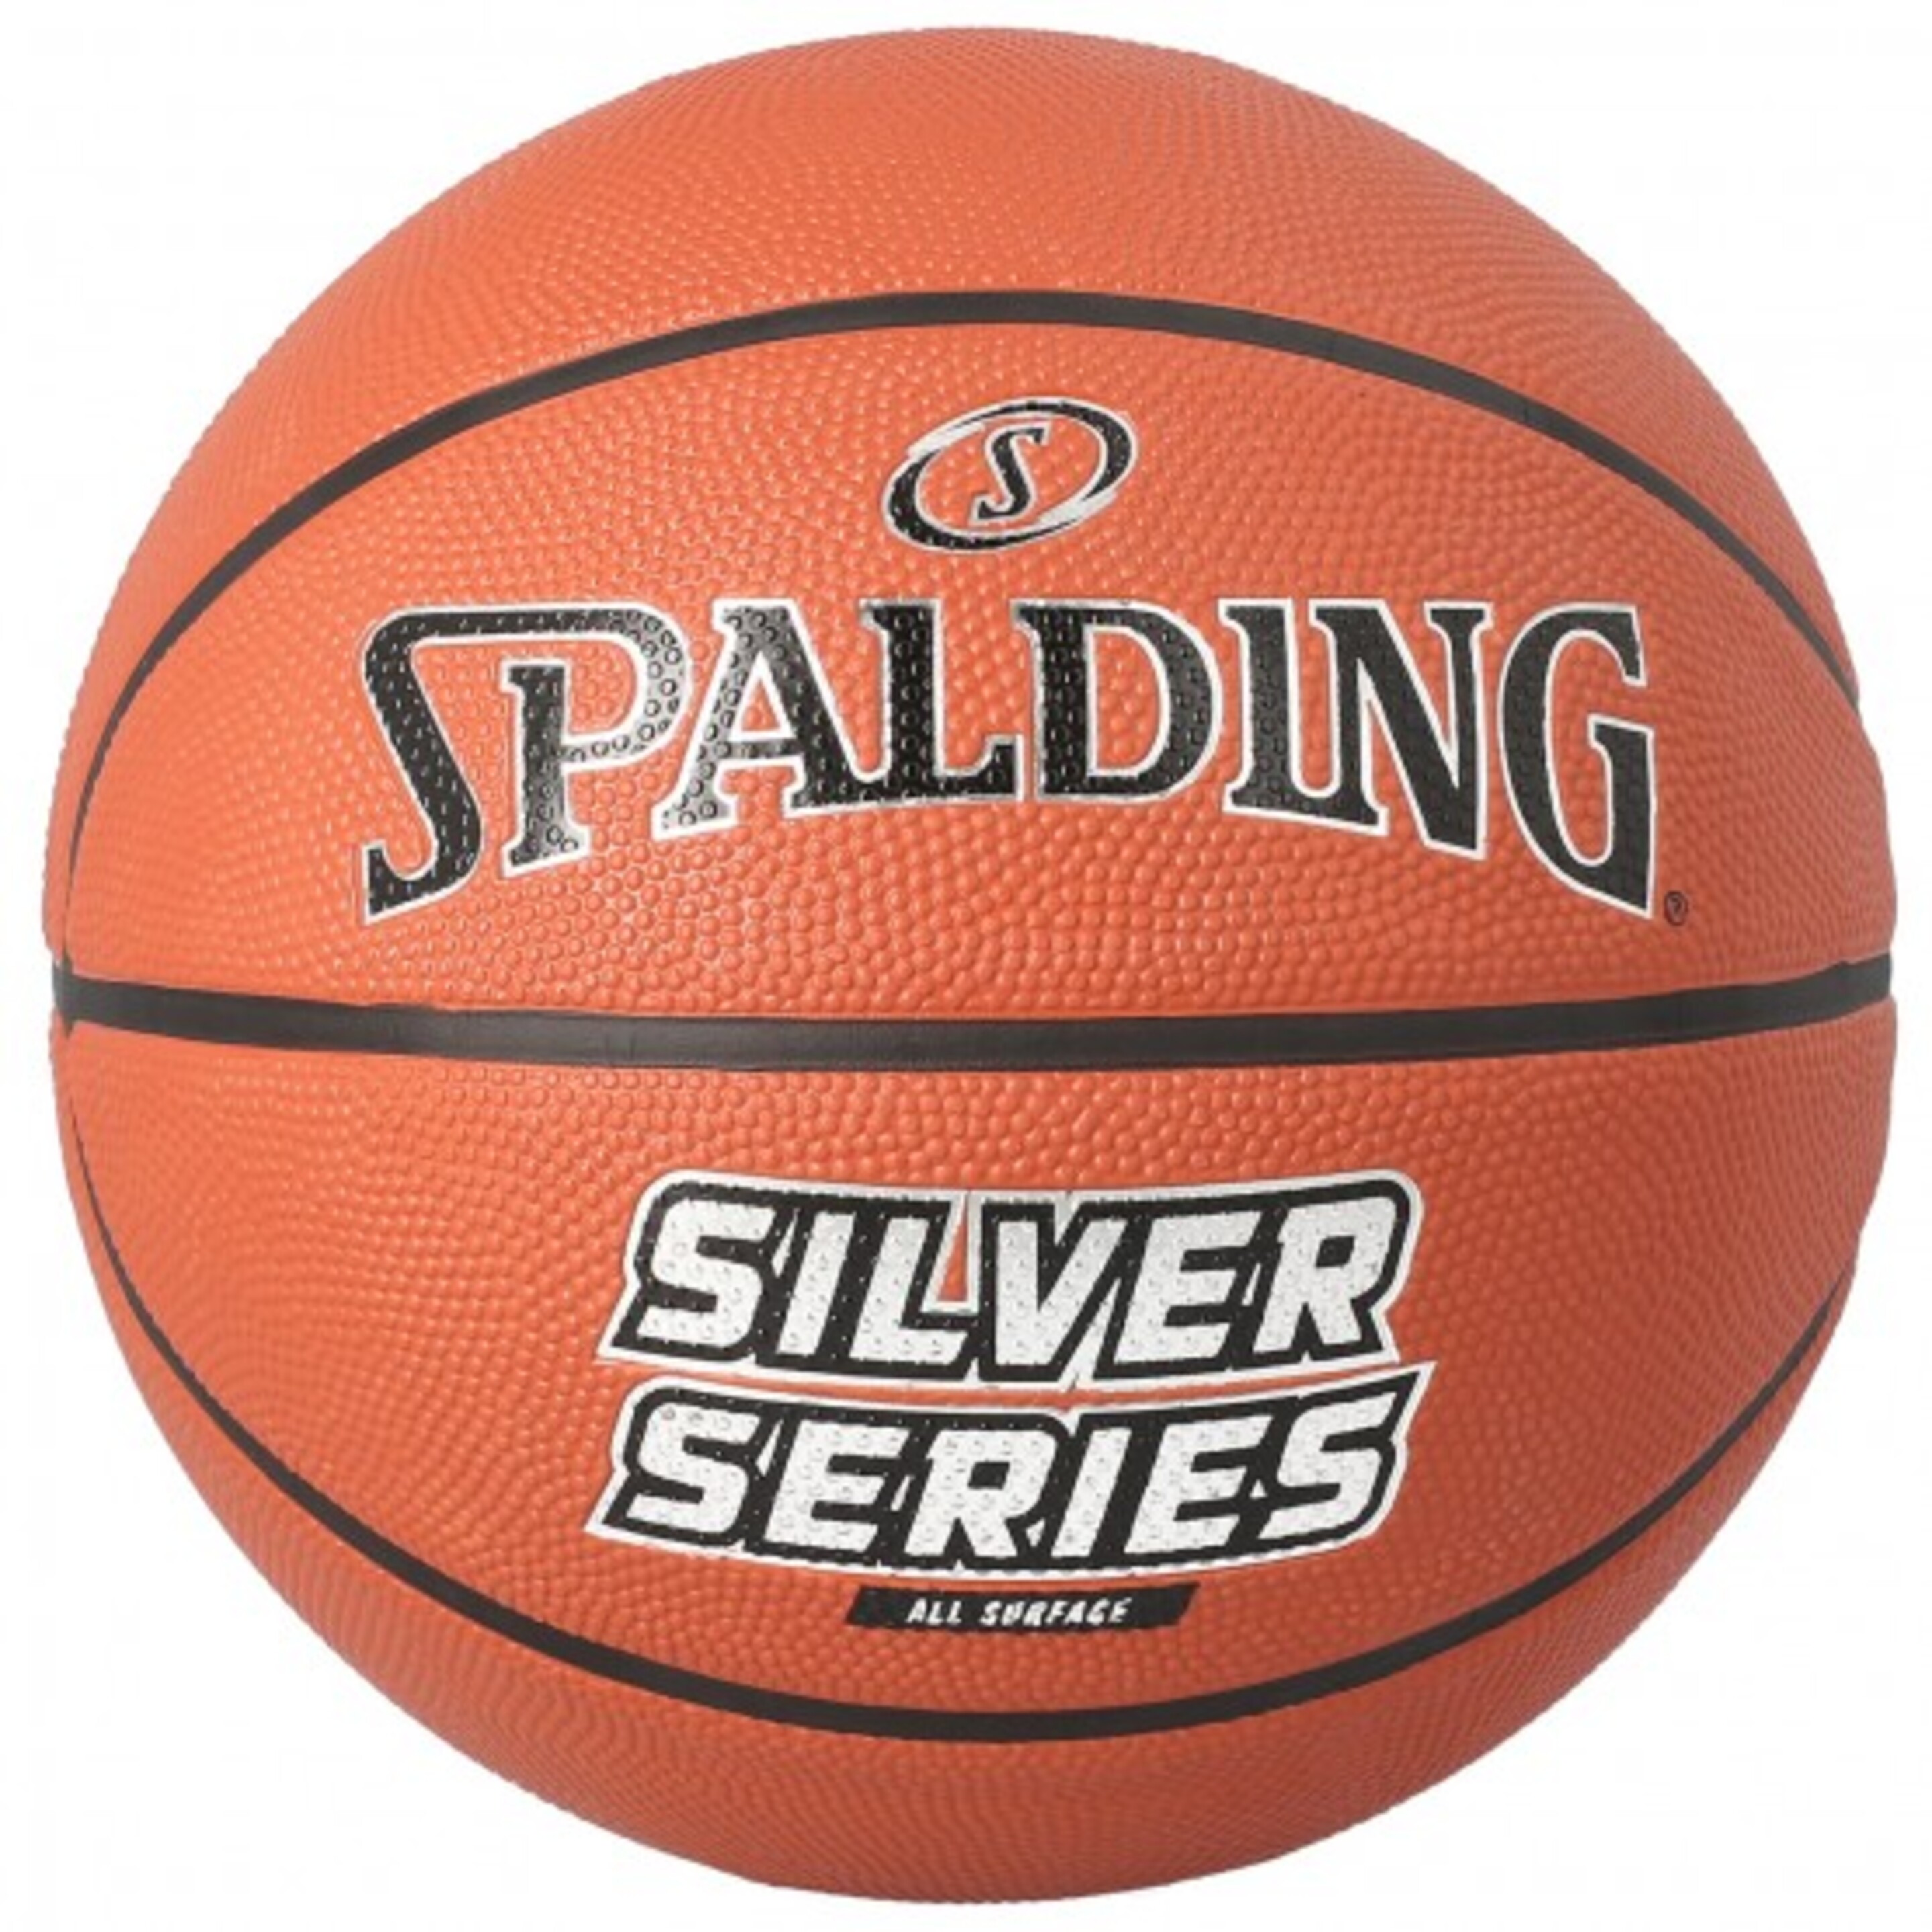 Basquetebol Spalding Silver Series Sz5 - naranja - 